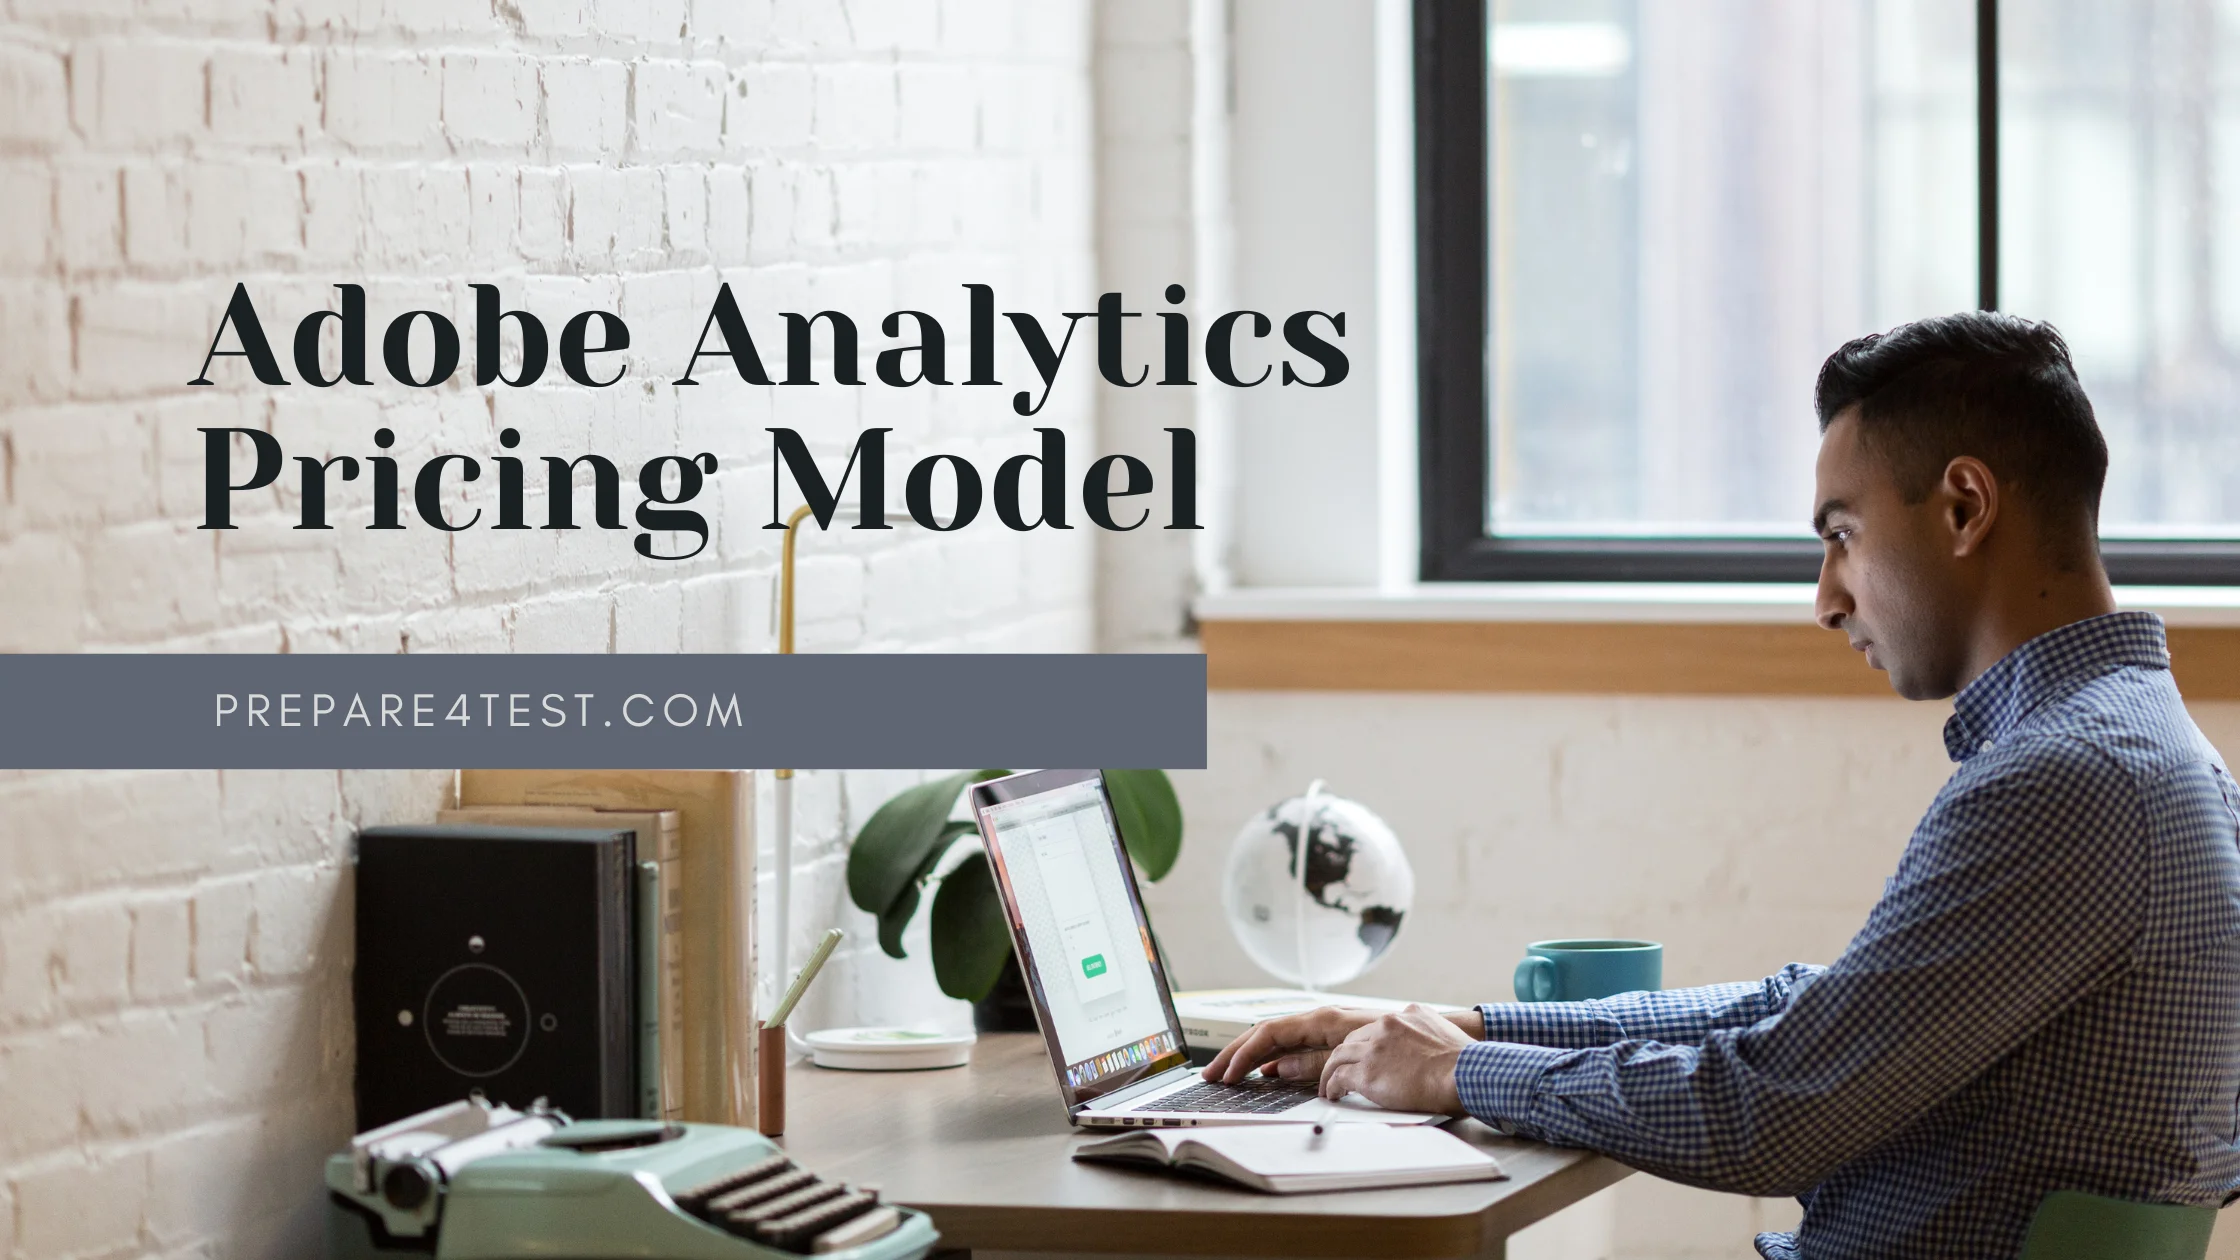 Adobe Analytics Pricing Model